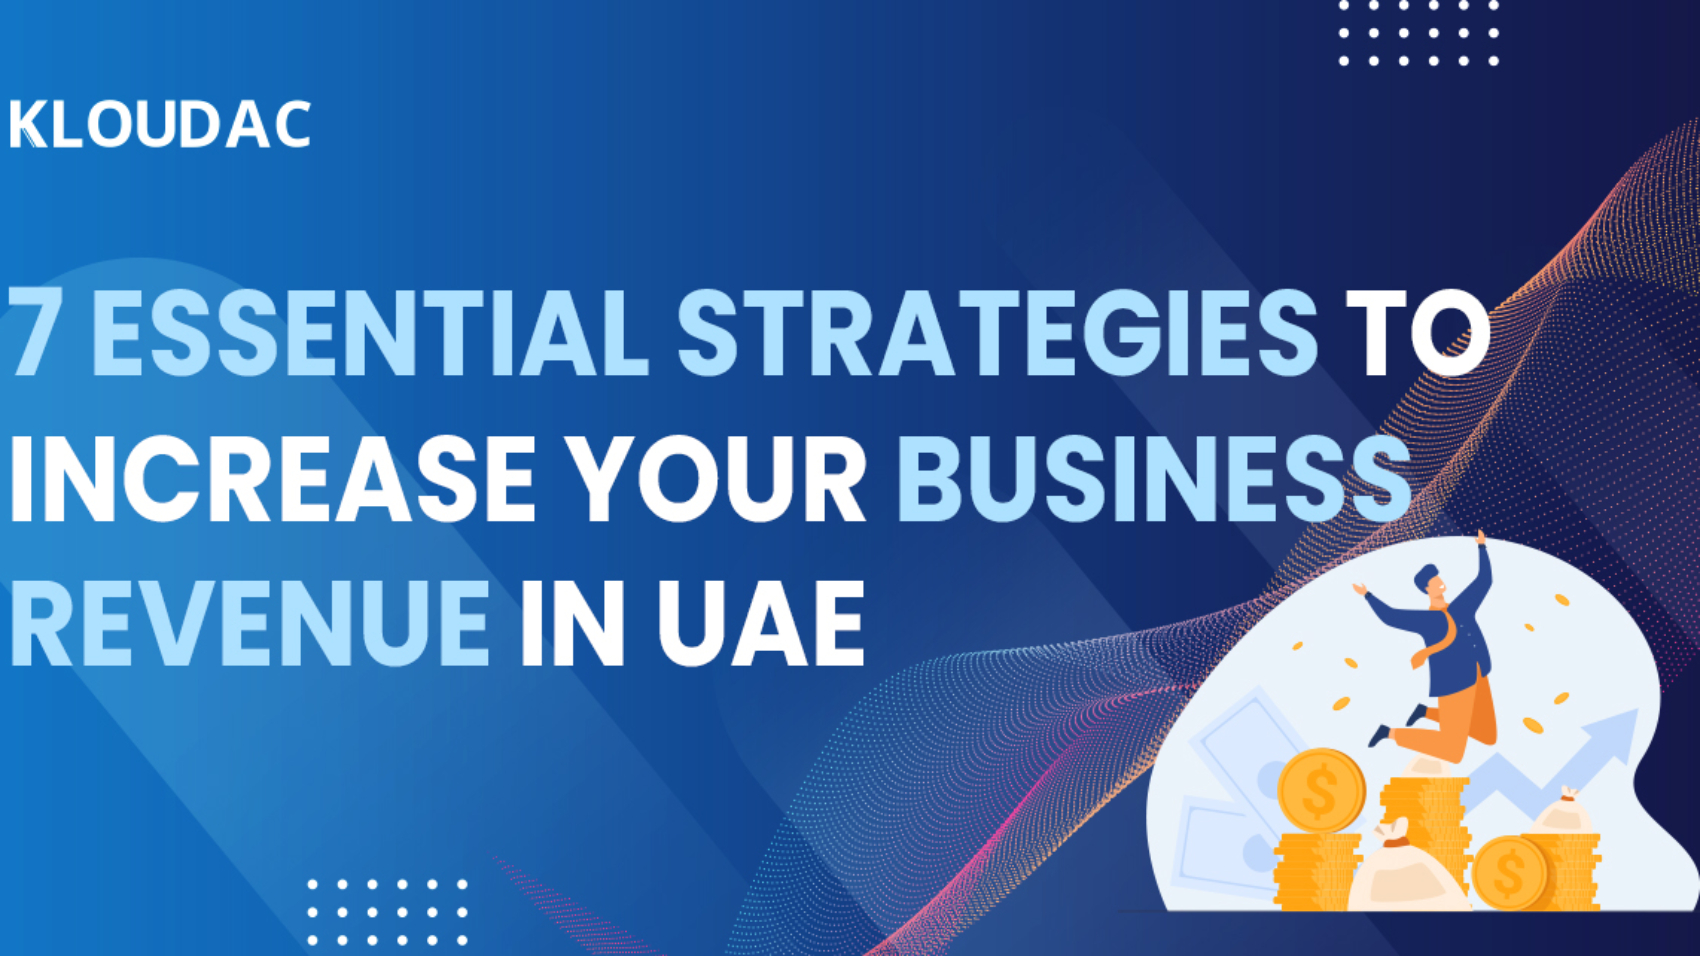 7 essential strategies to increase your business revenue in UAE